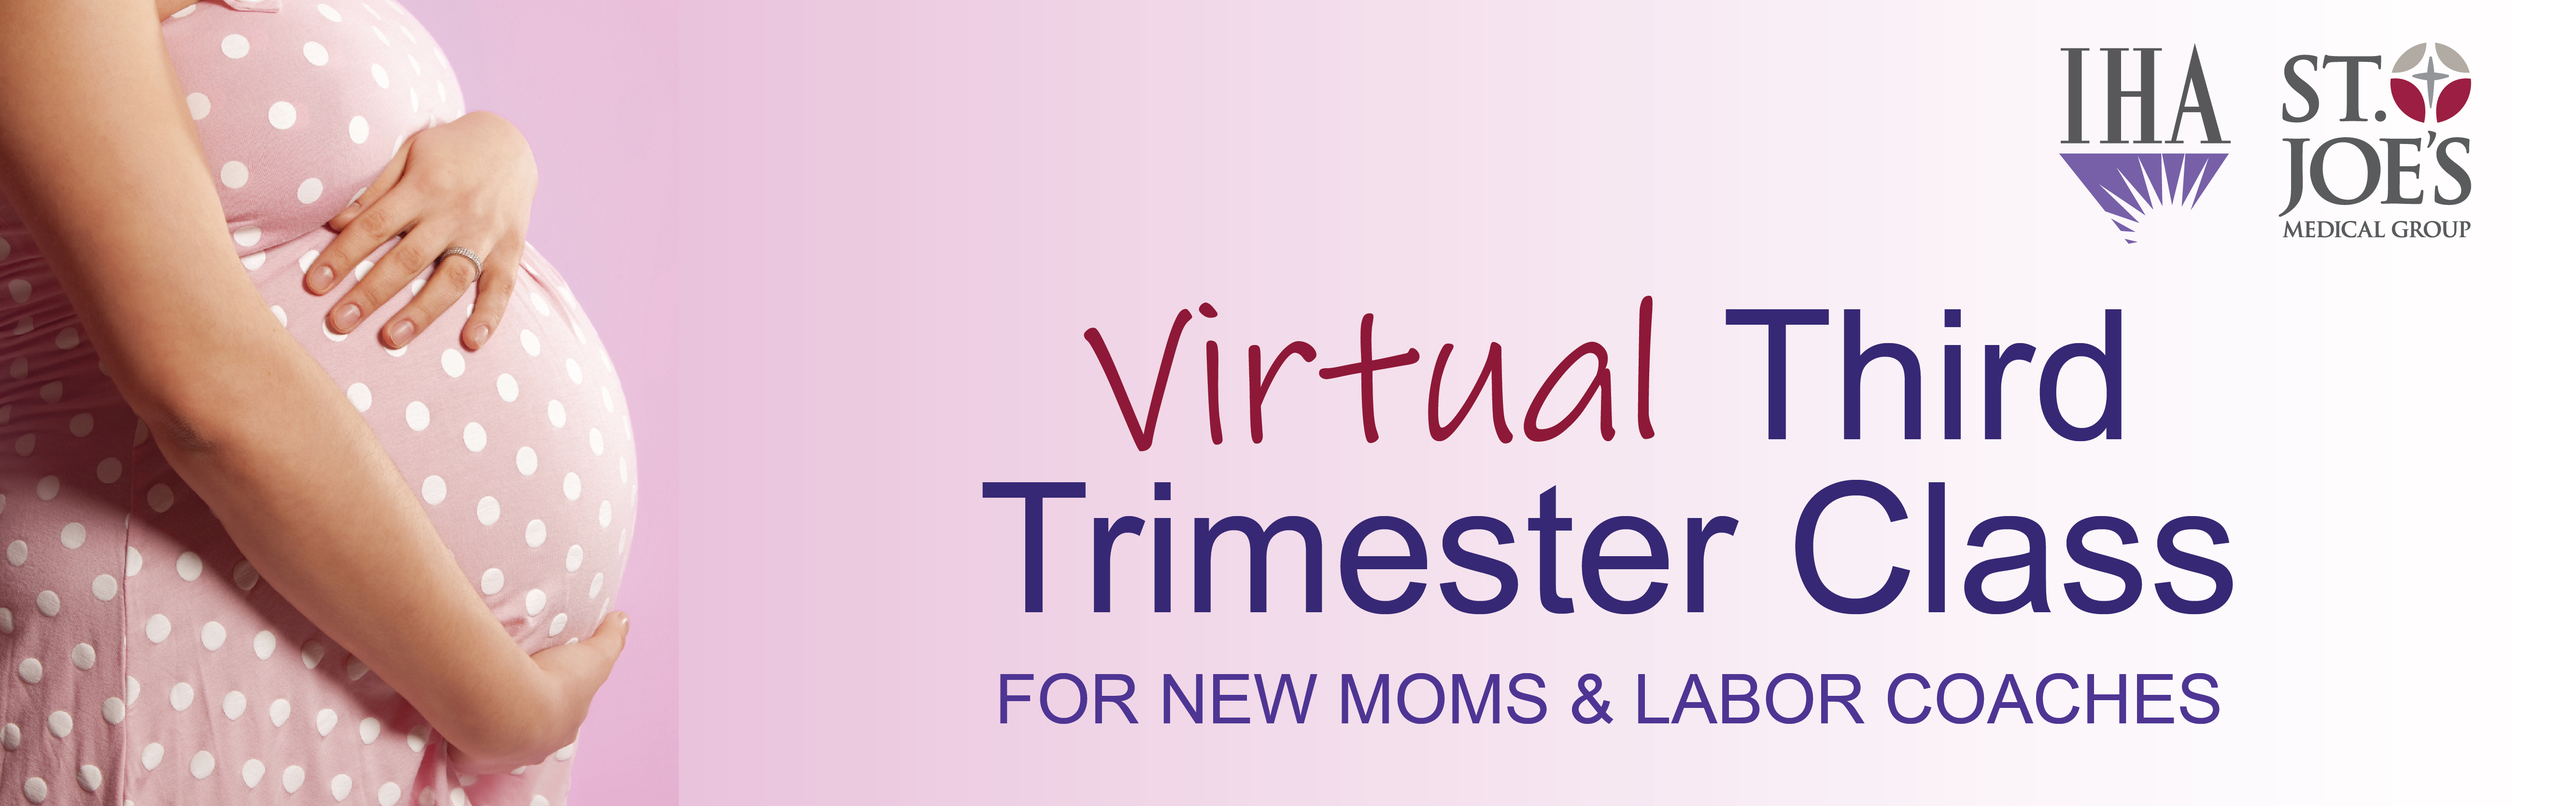 Virtual Third Trimester Class